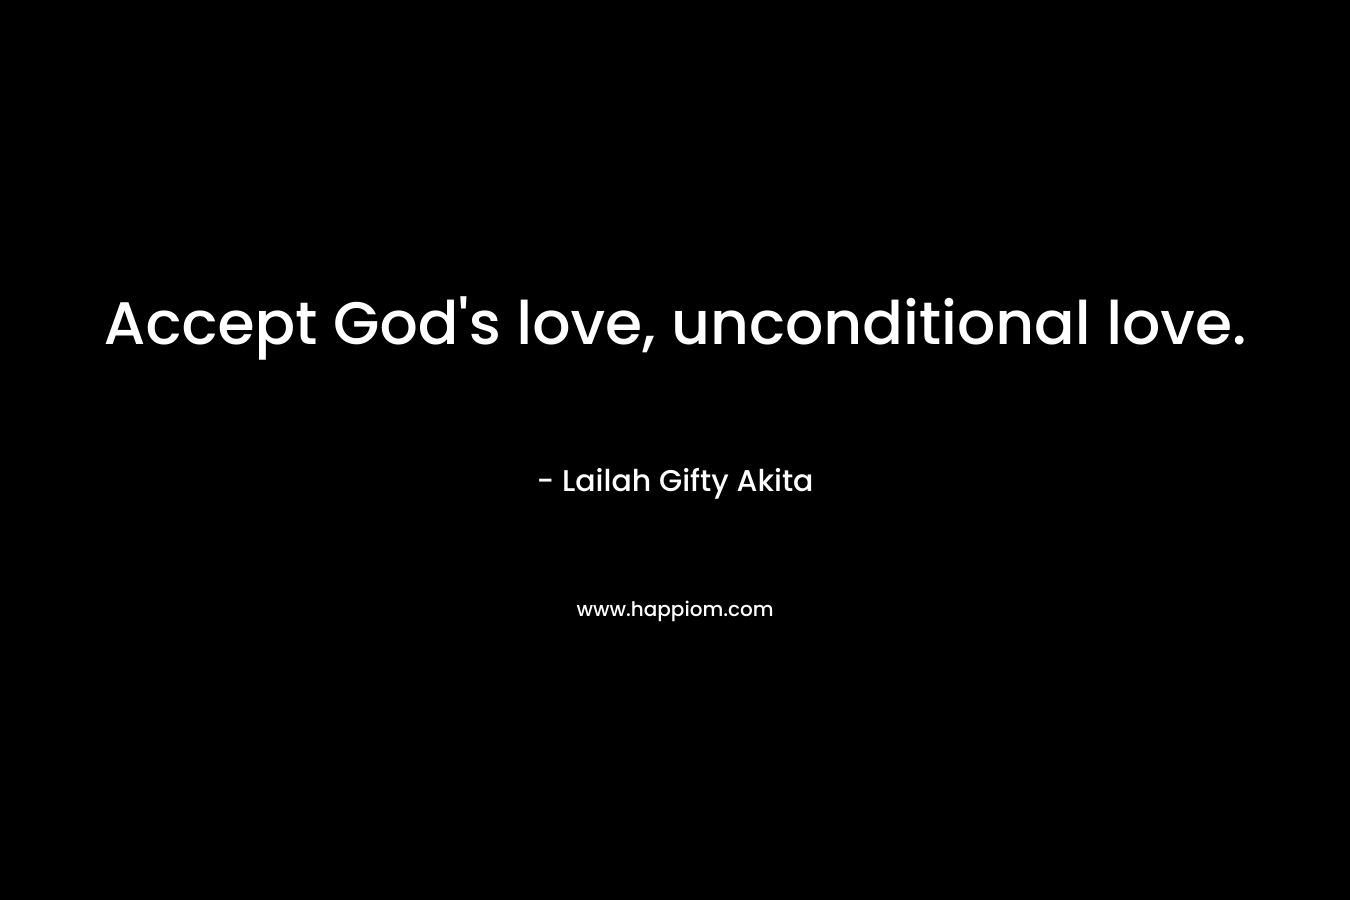 Accept God's love, unconditional love.